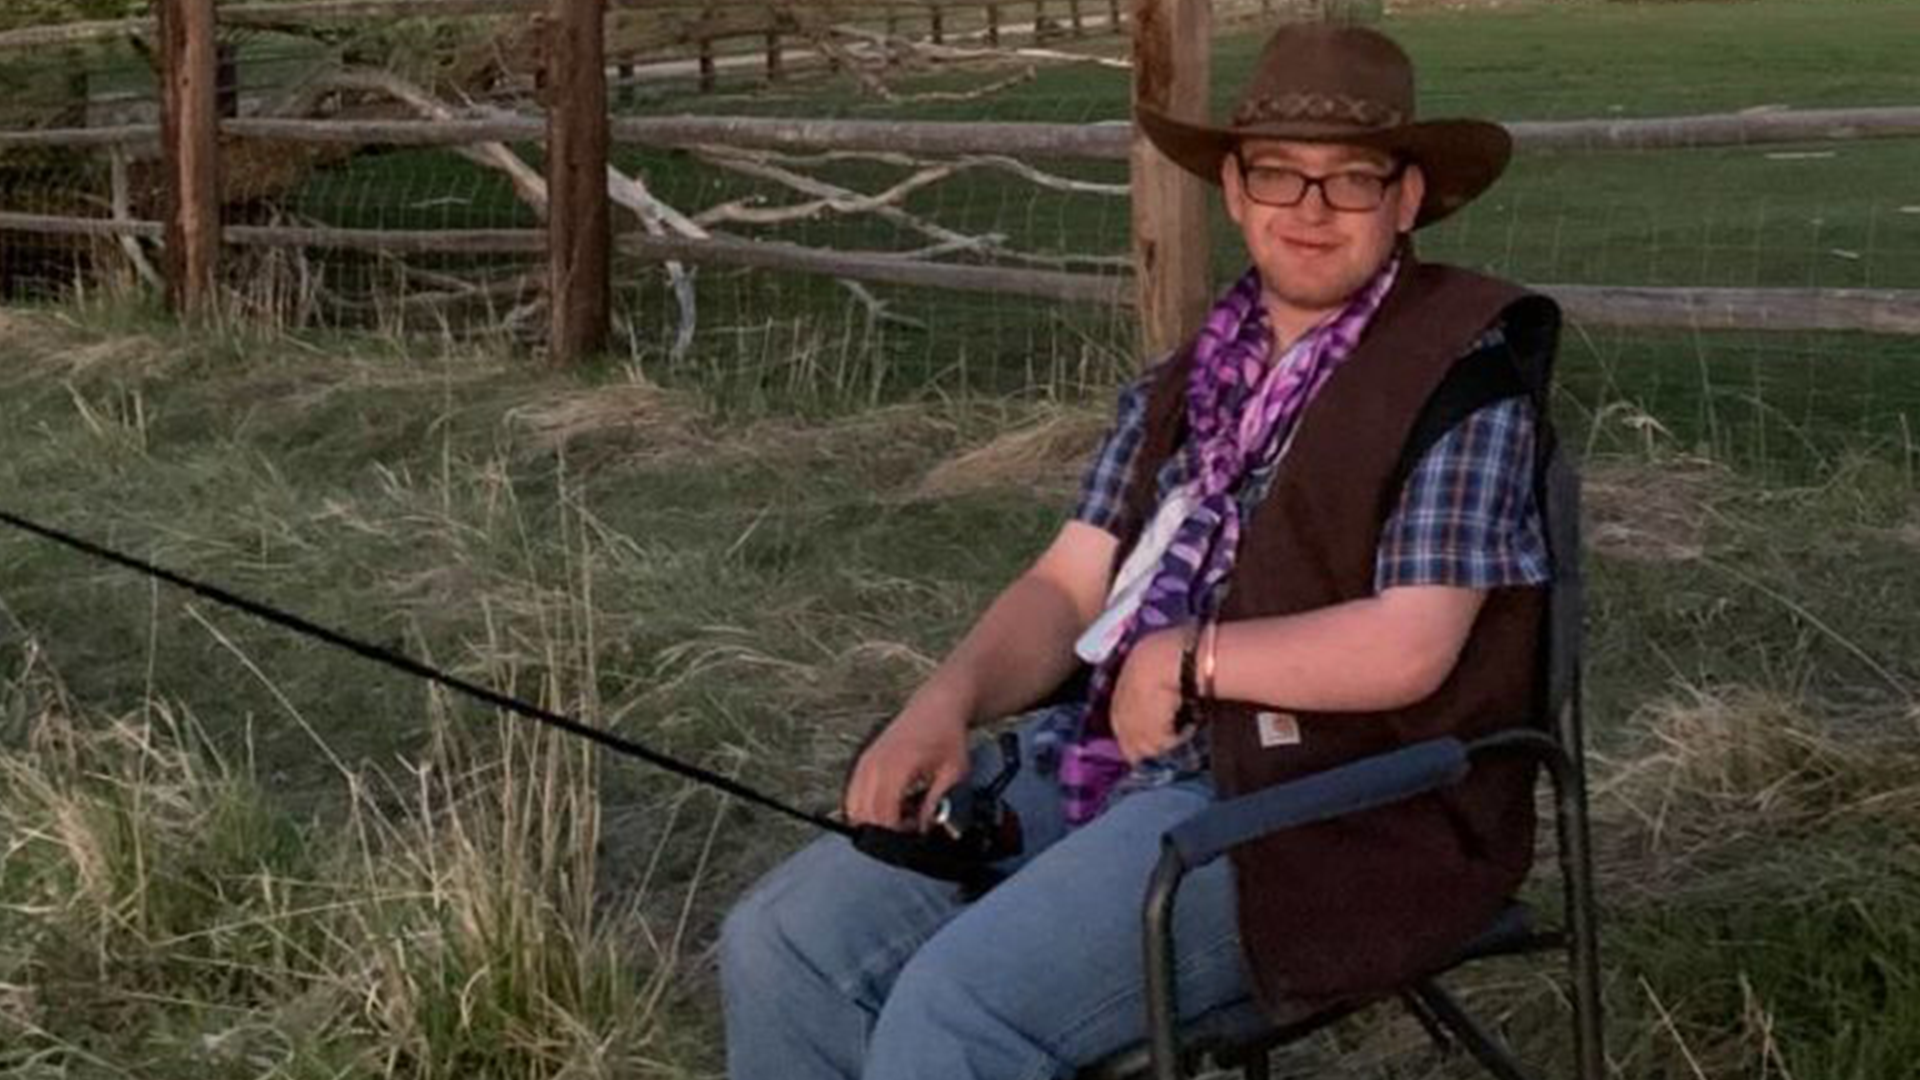 Robert Sandoz Sits wearing a cowboy hat holding a fishing pole